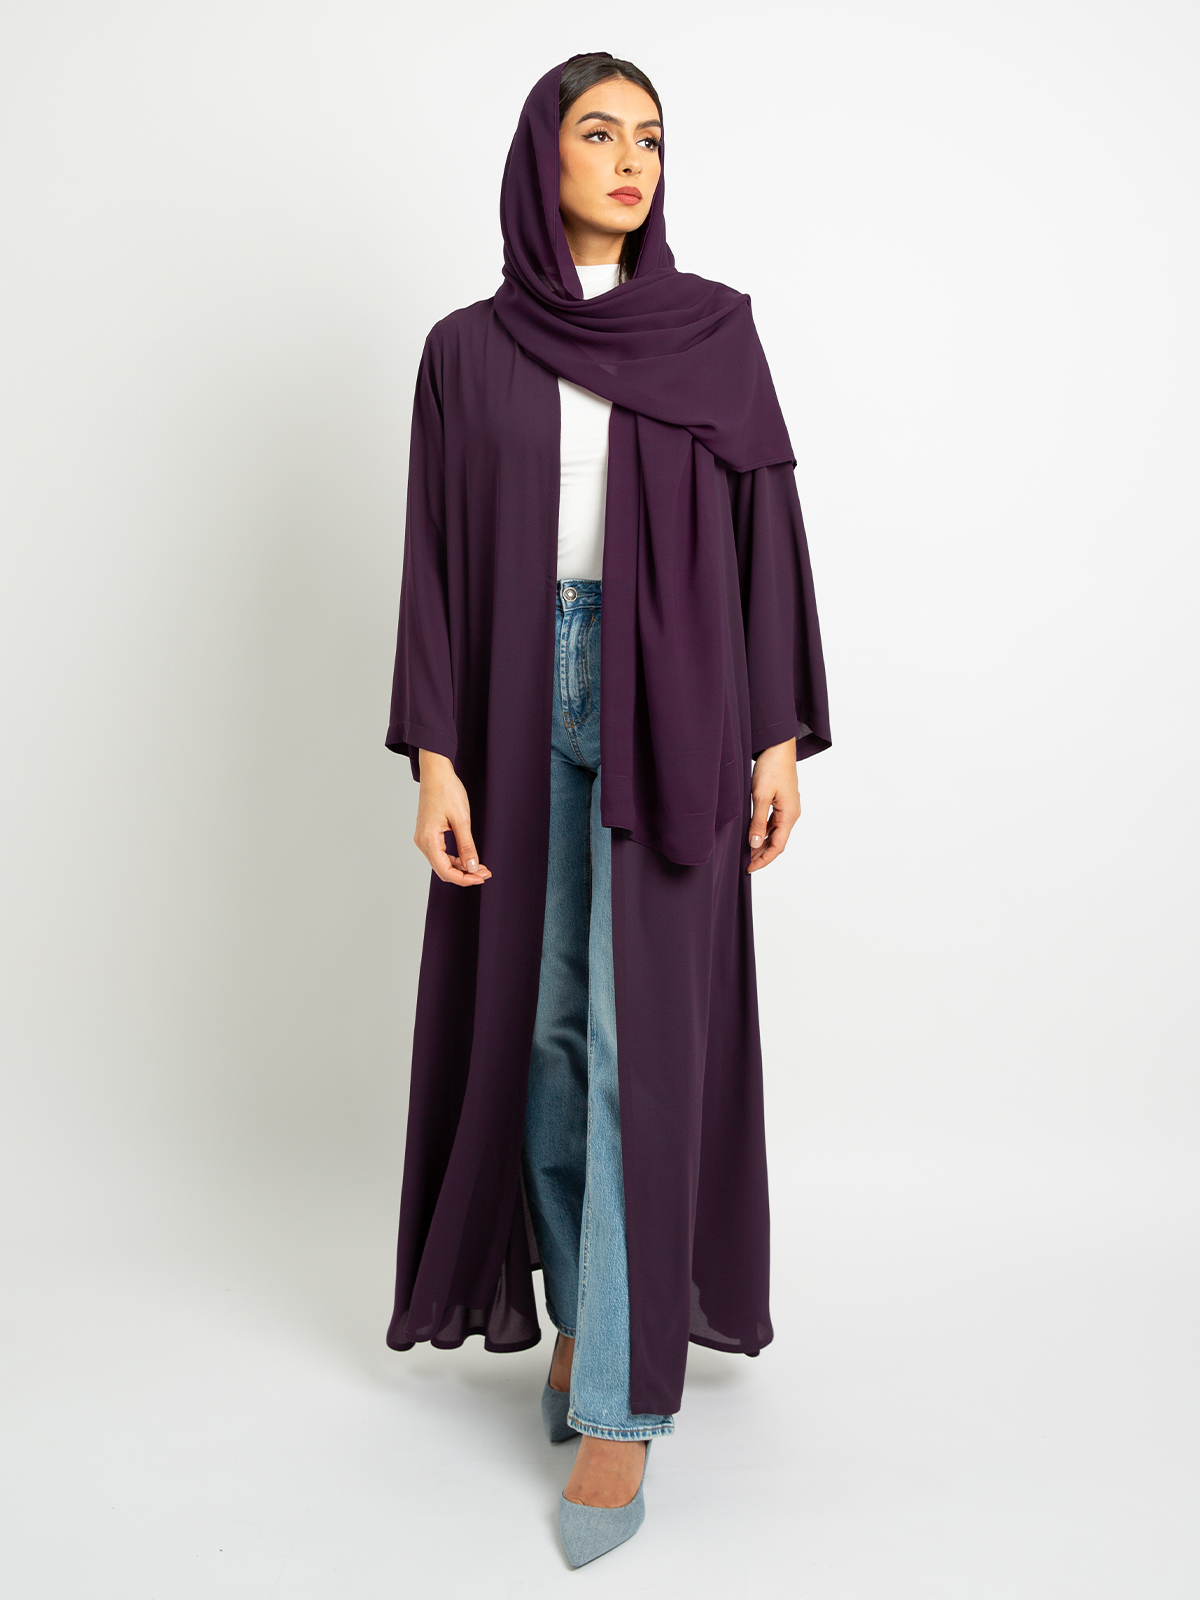 Mauve - A Cut Long Open Half Cloche Abaya in Light Fabric